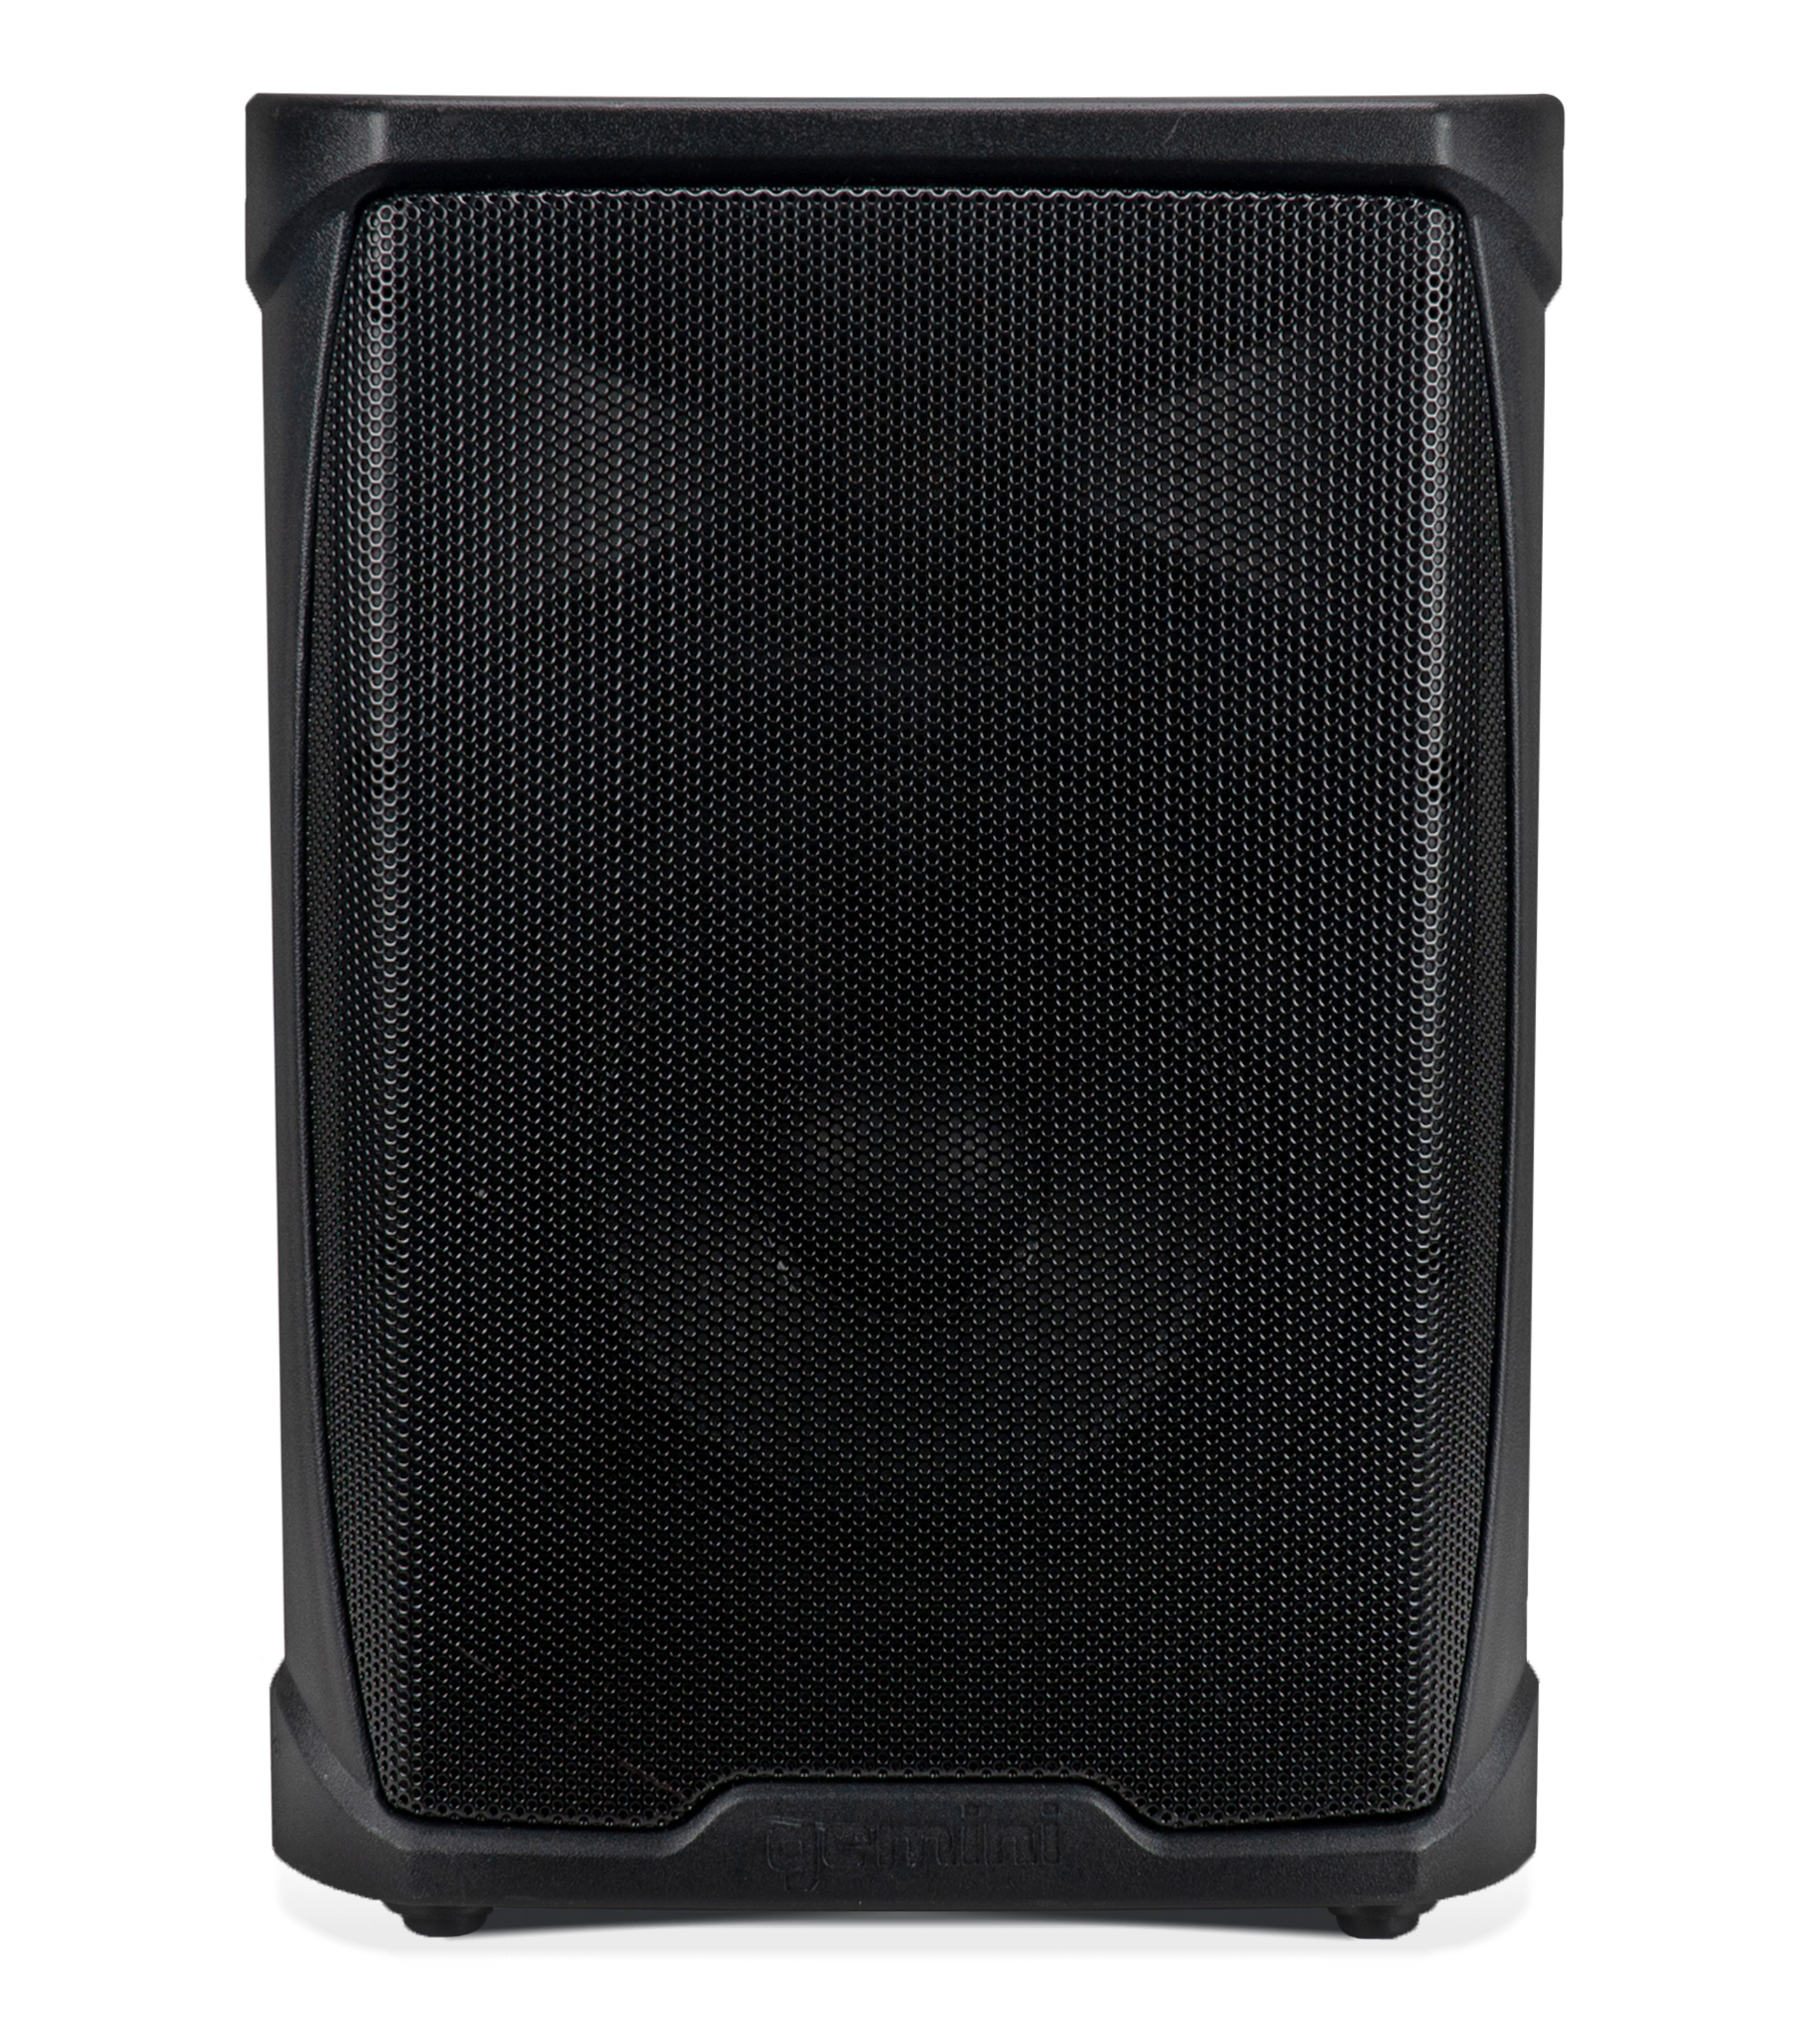 Gemini Sound GPSS-650 Powered Speakers